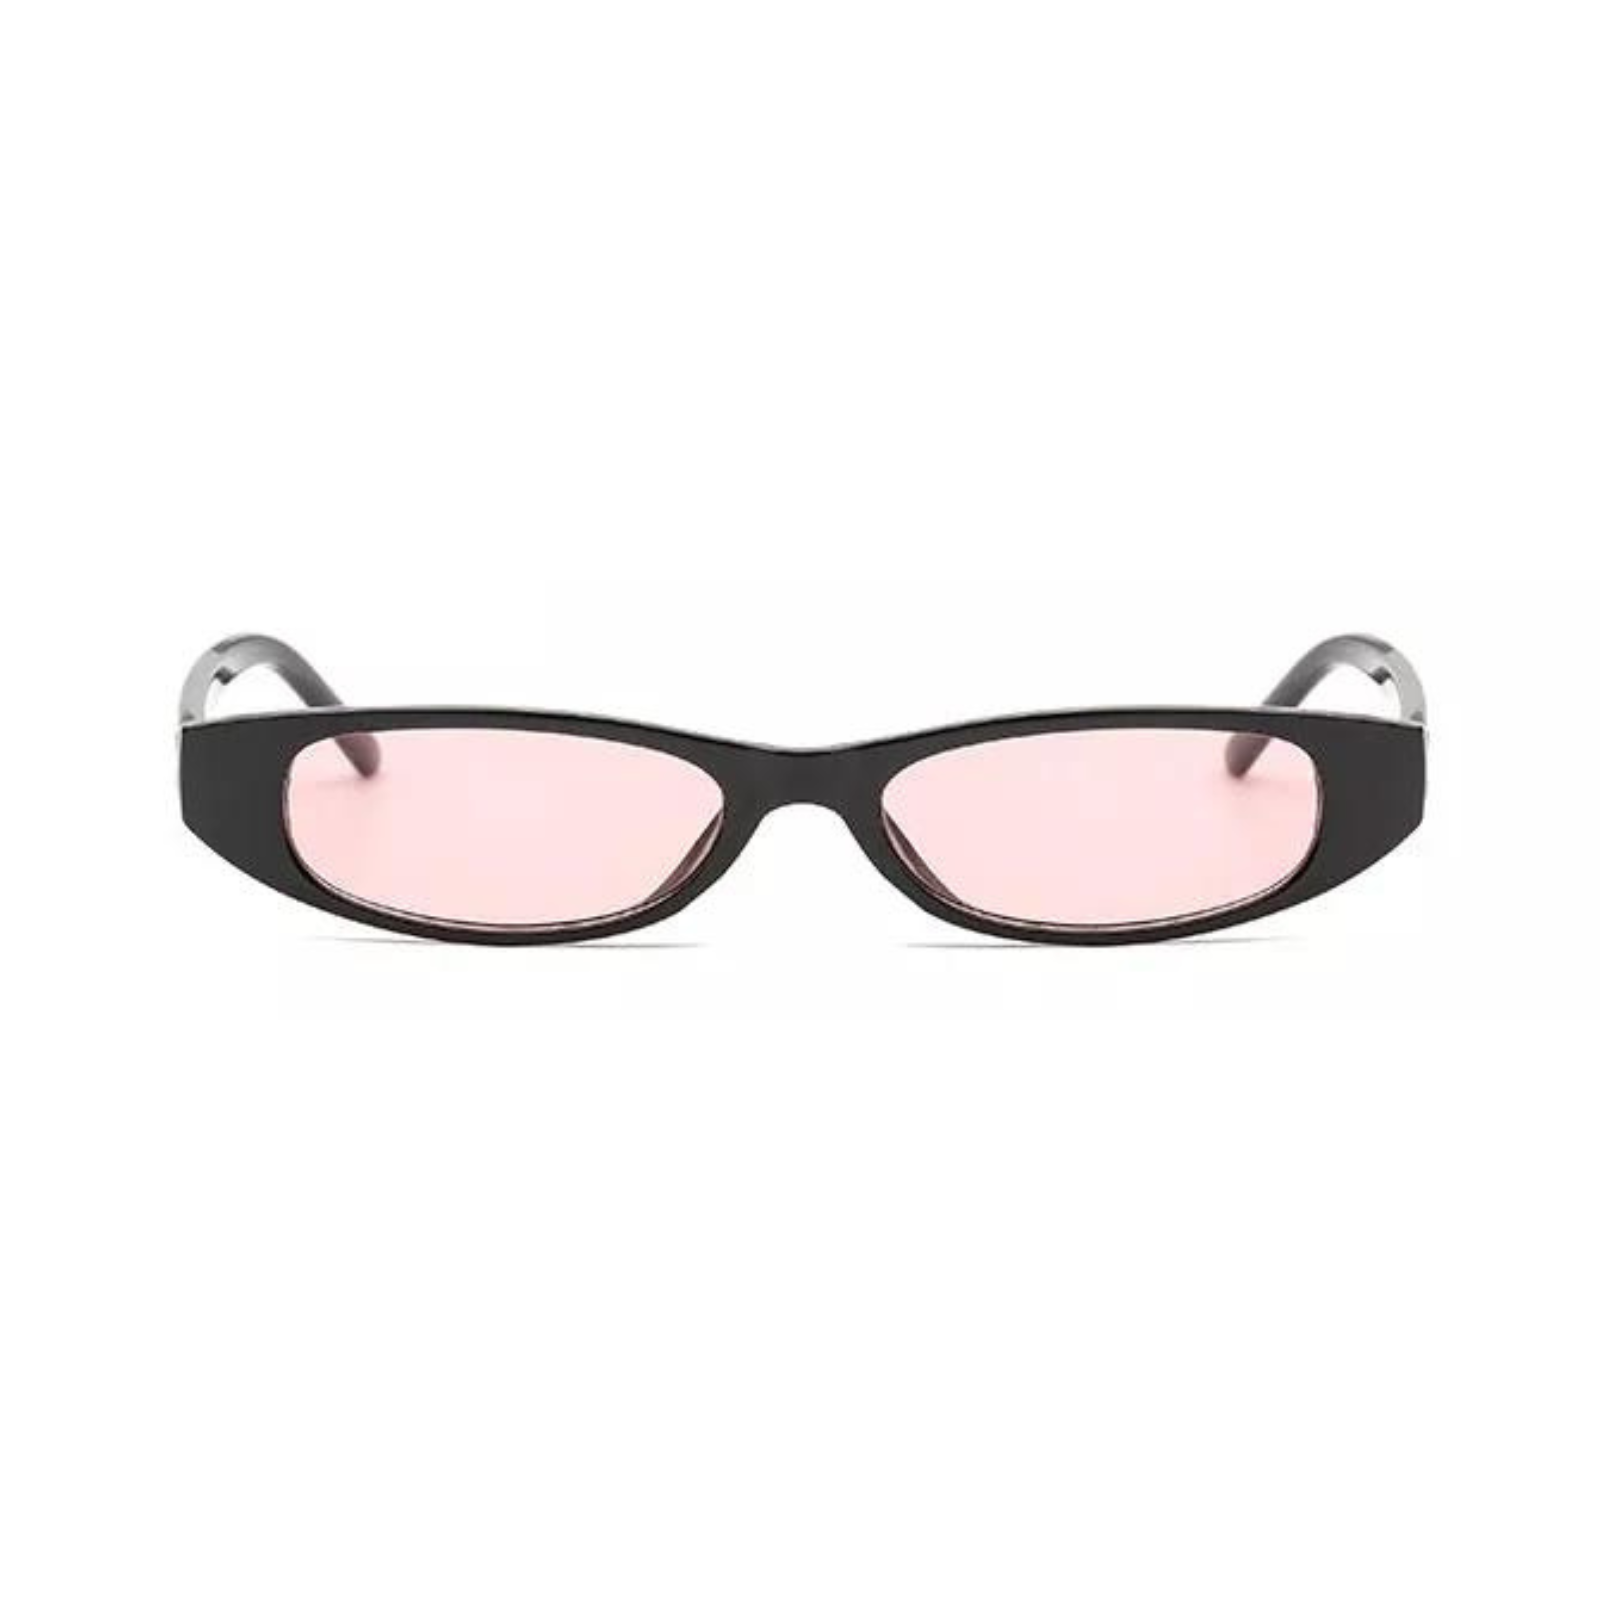 Paige Sunglasses Black + Pink